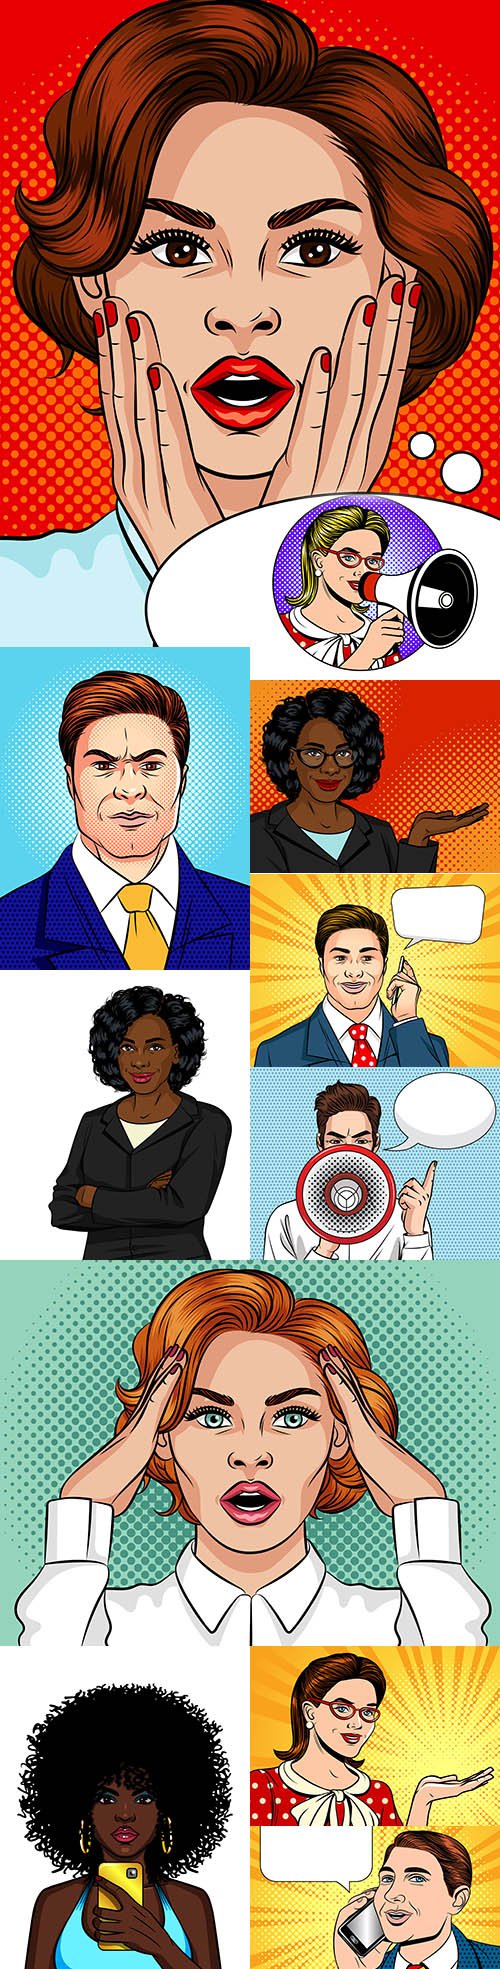 Business people pop art style color illustration